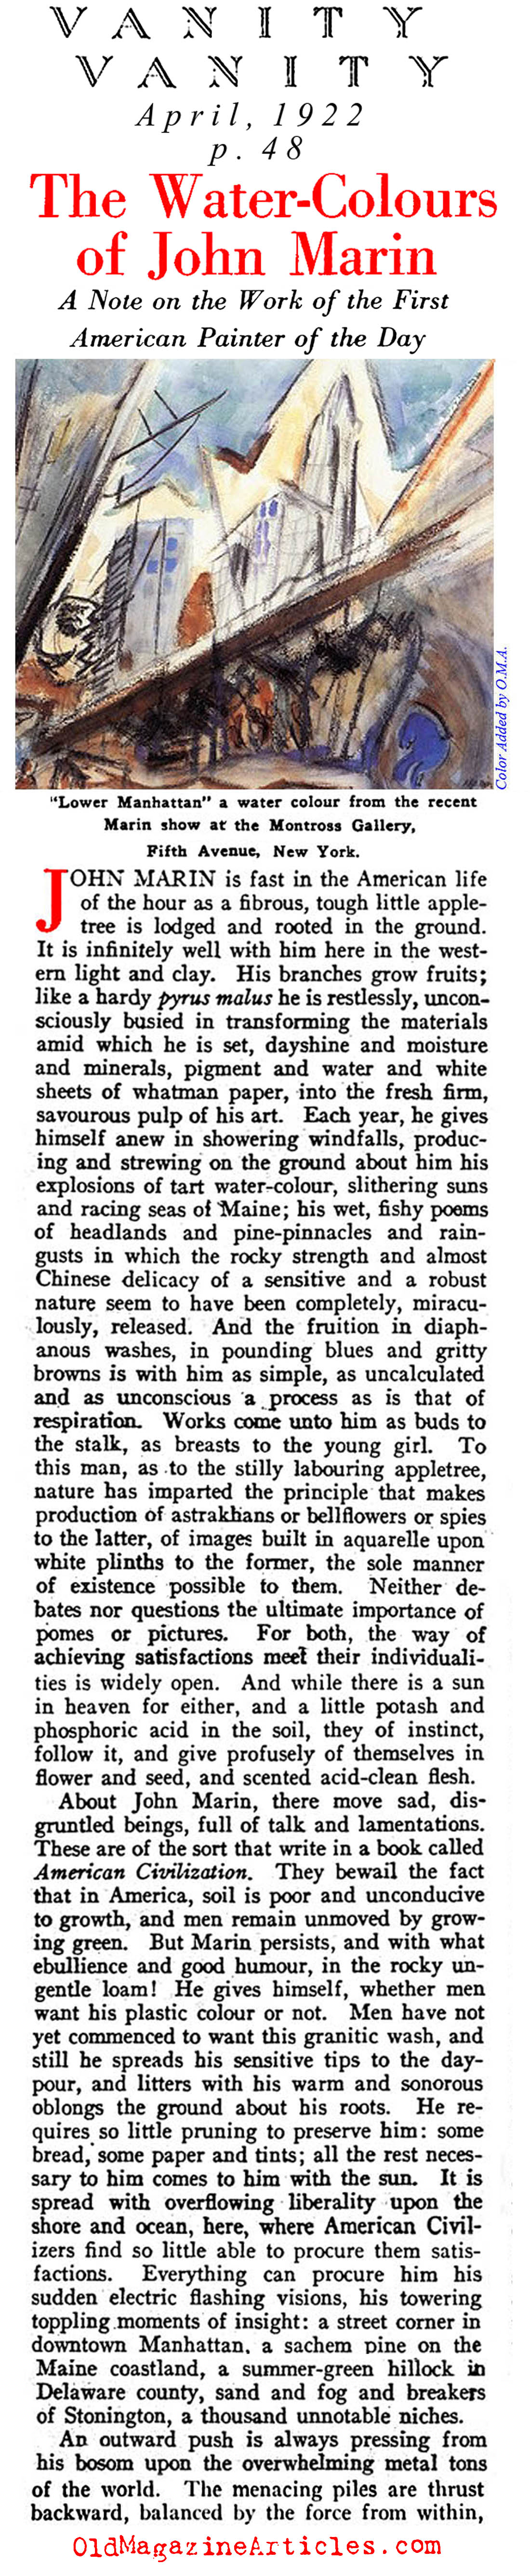 The Water-Colors of John Marin (VanityFair, 1922)